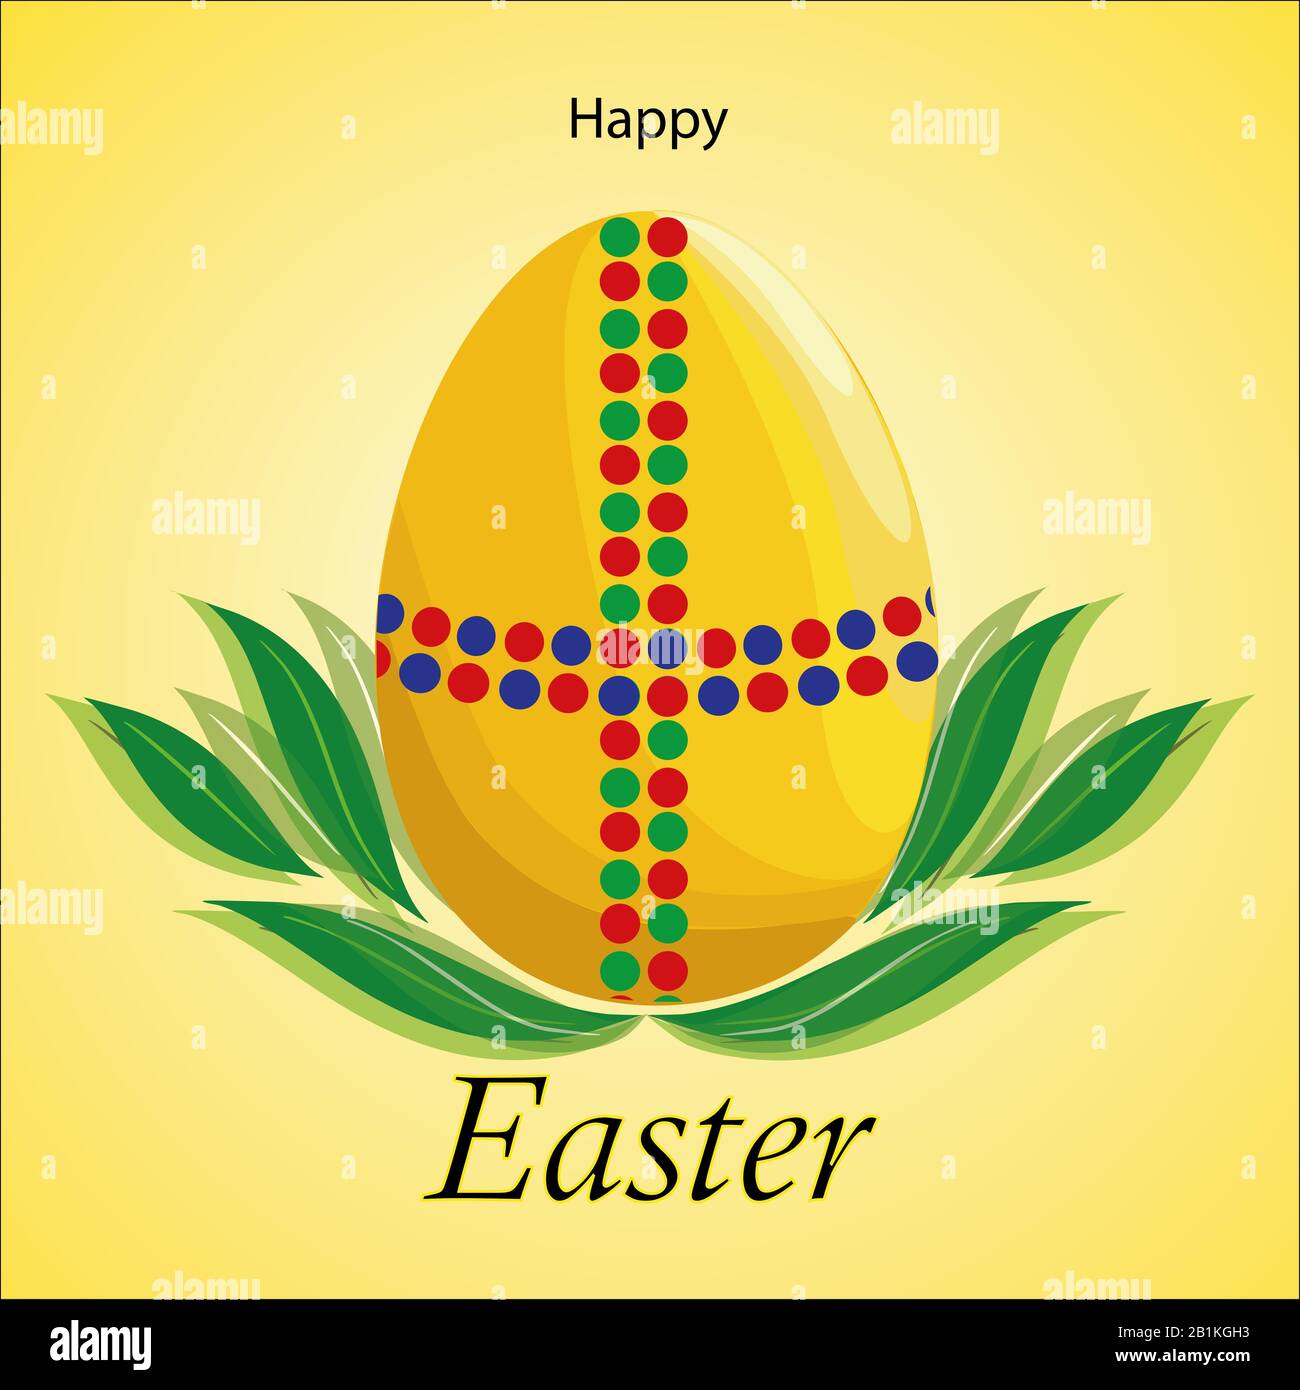 Golden Easter egg, green leaves .Happy Easter text Illustration. Stock Photo